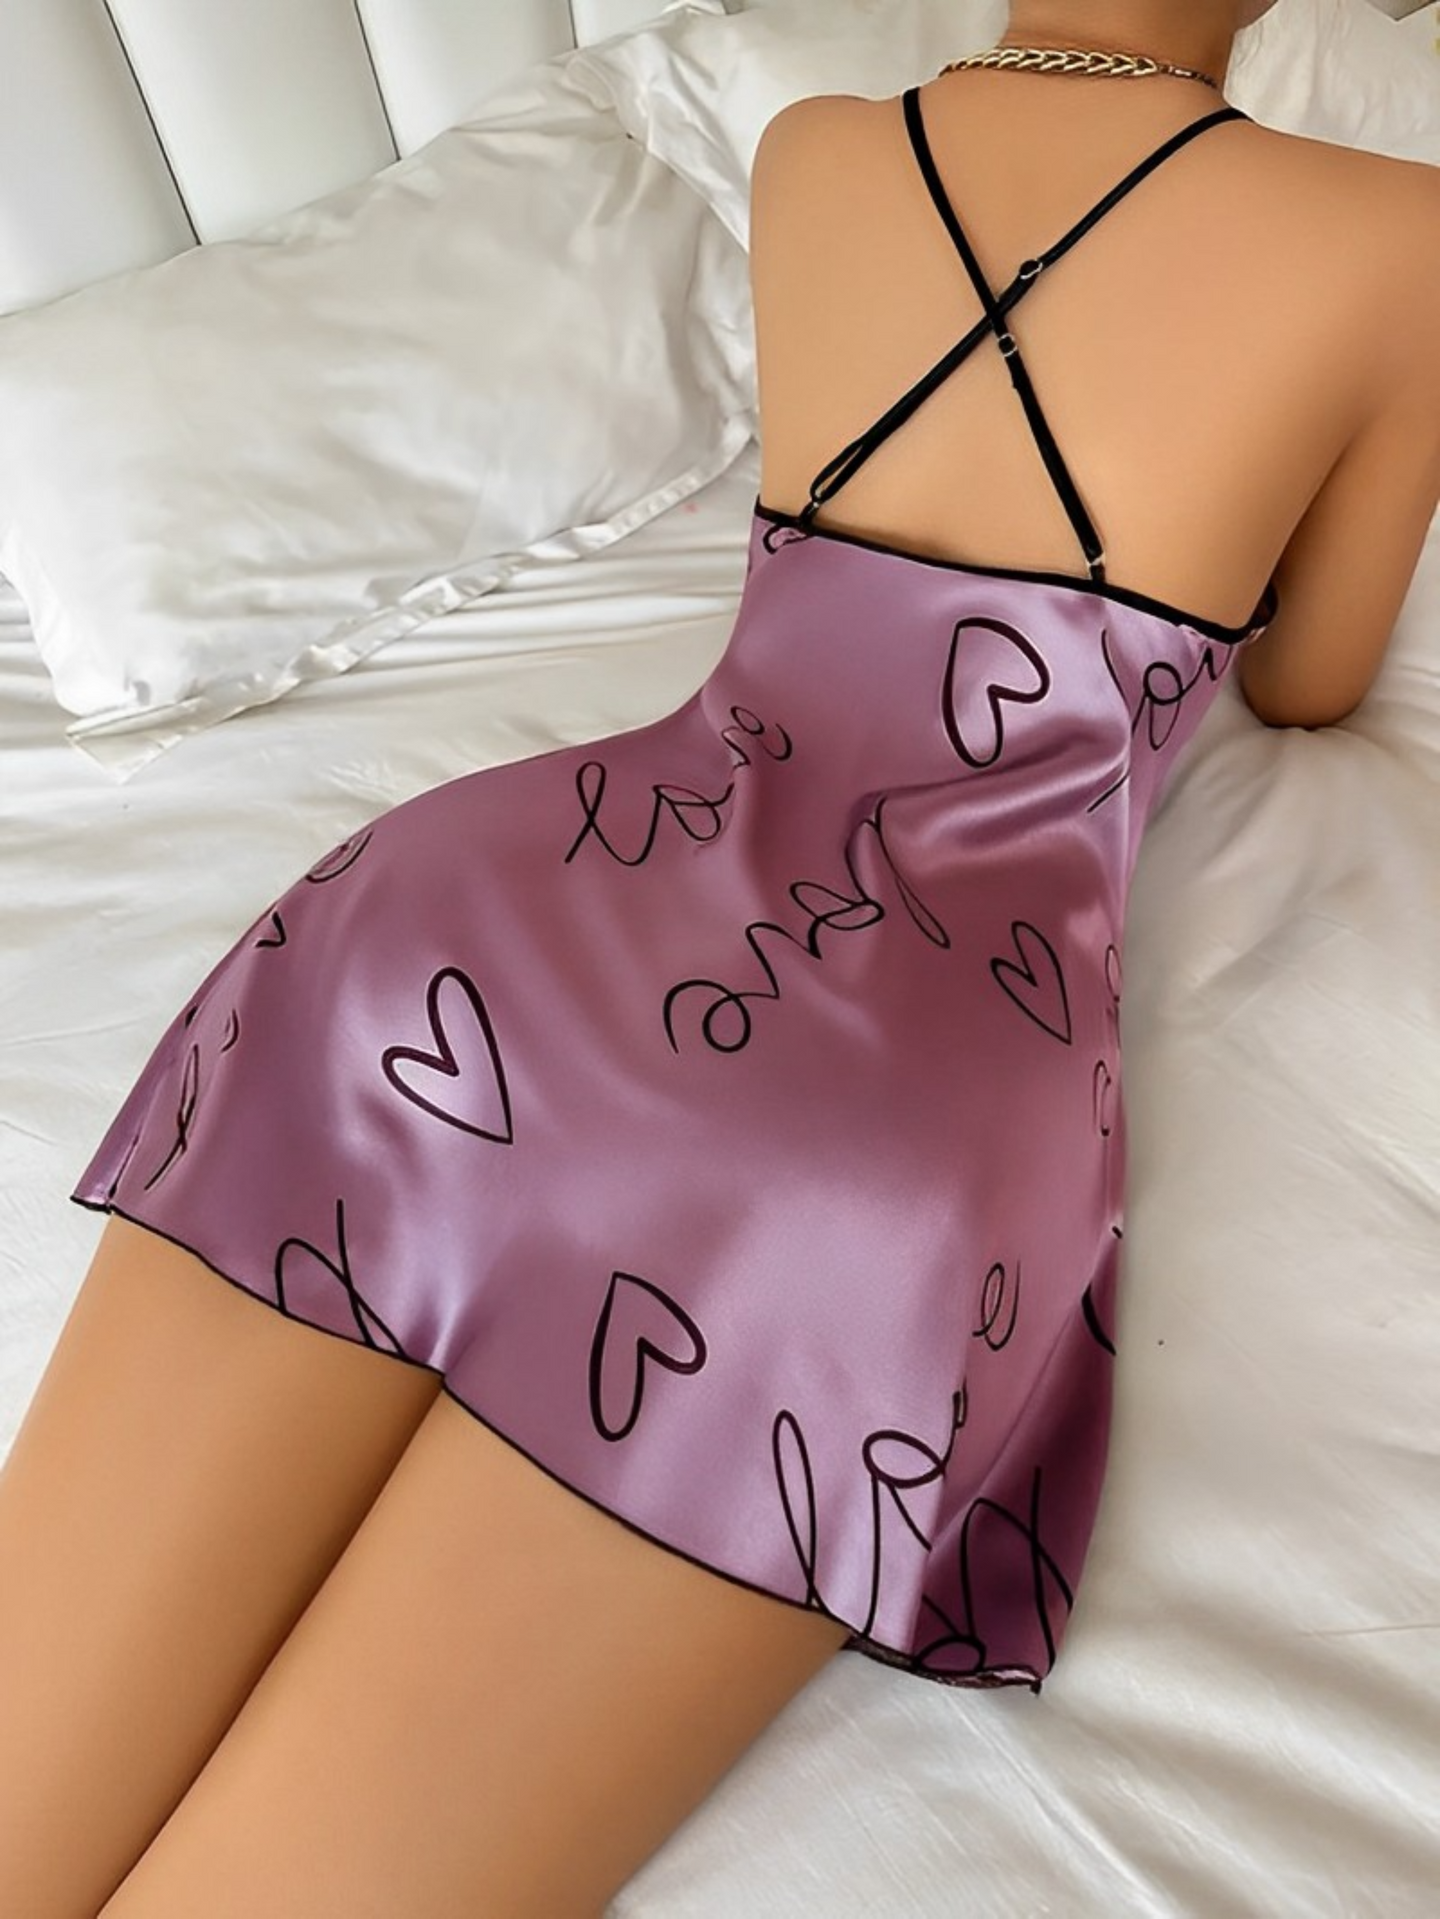 Casual Heart Letter Print Satin Slip Nightdress 1 Piece Sexy Negligee for Women. Backless, ideal as nightwear &amp; loungewear for women 